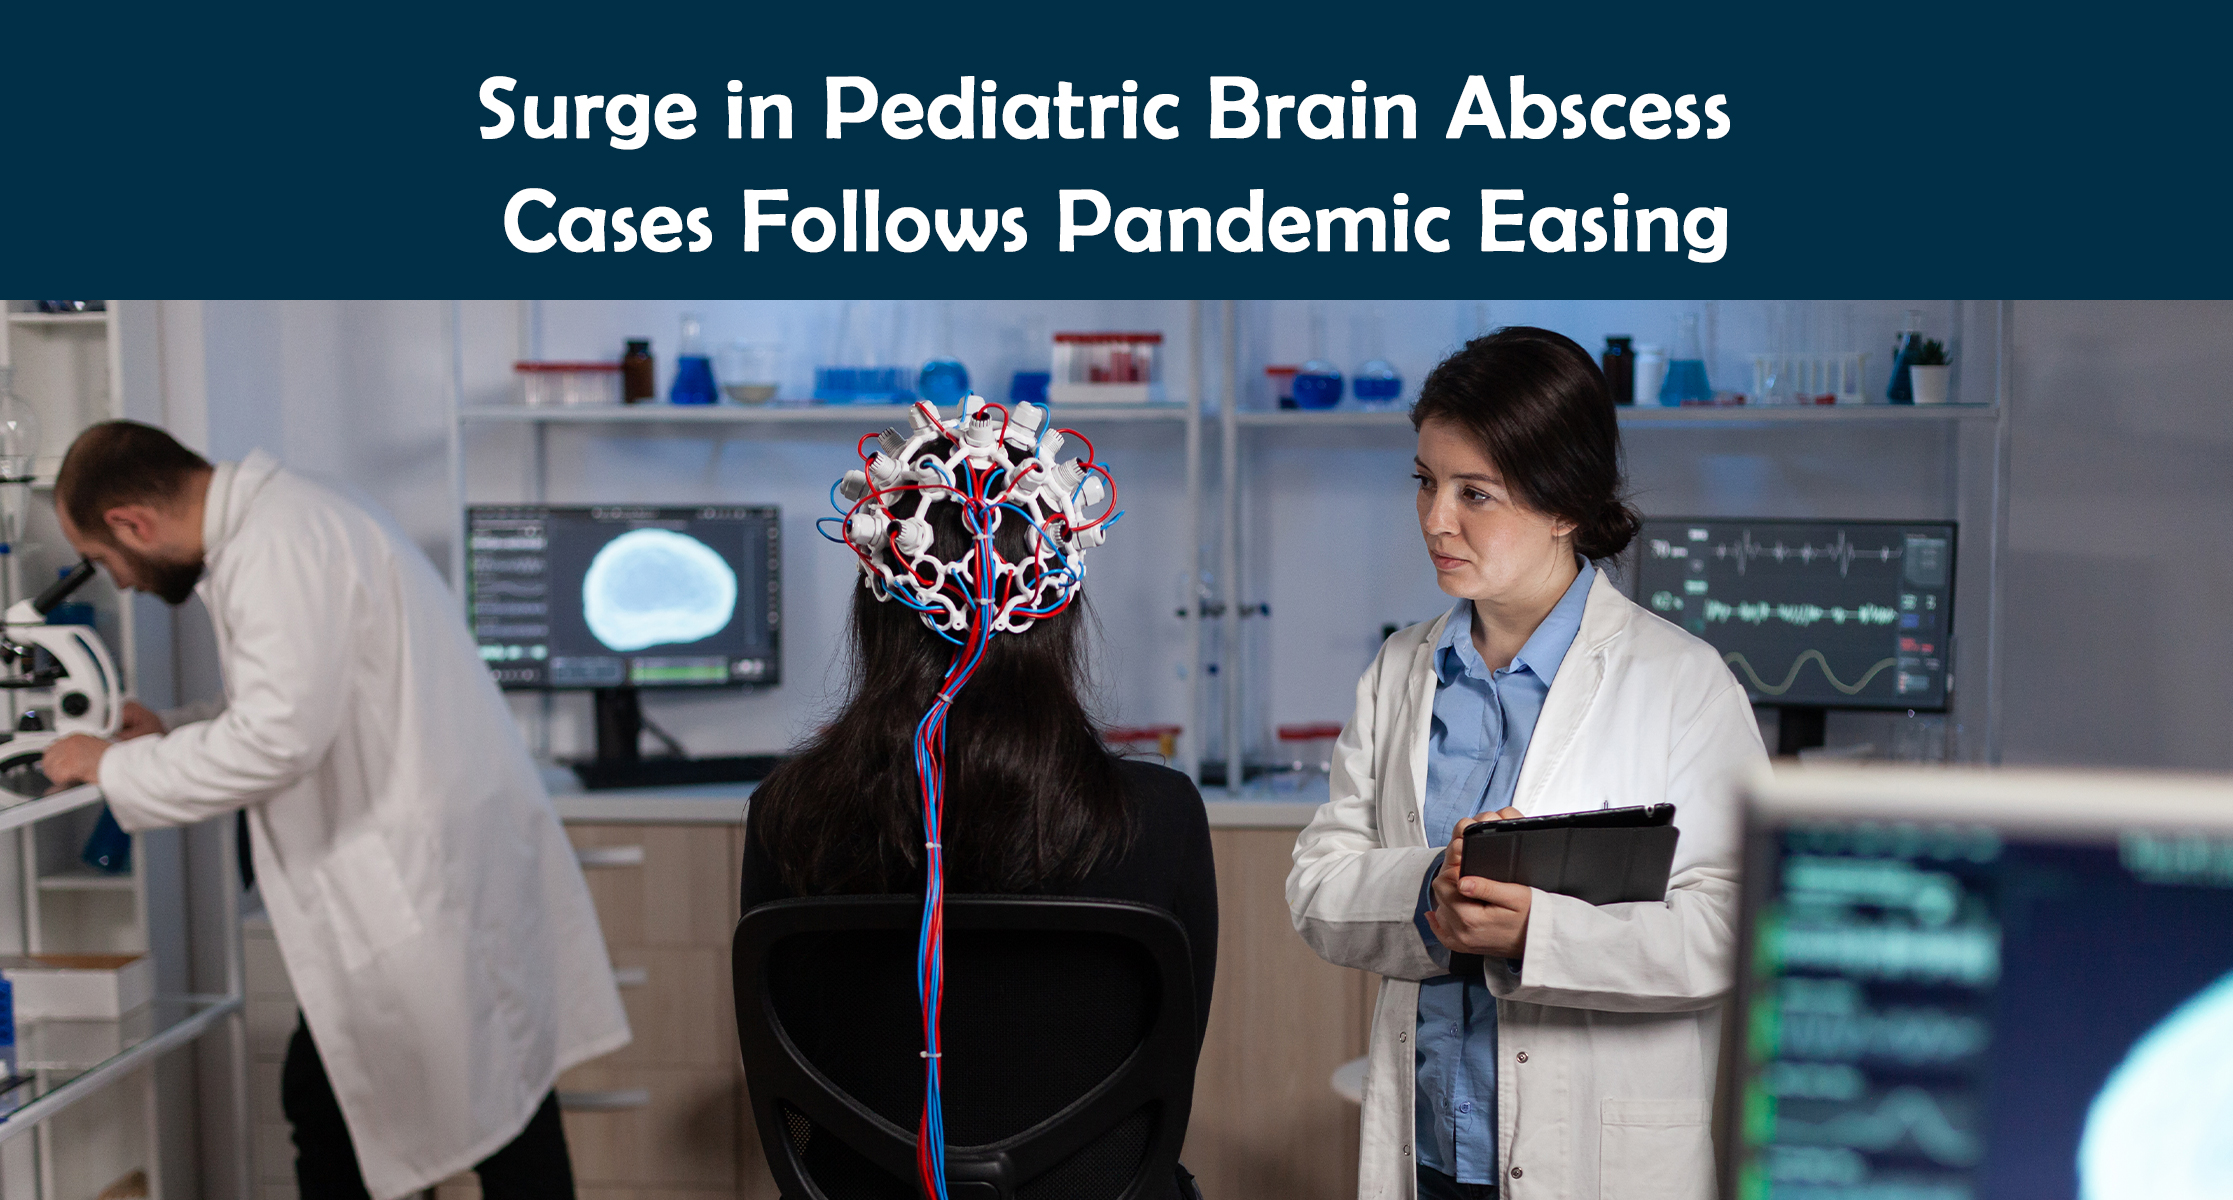 Surge in Pediatric Brain Abscess Cases Follows Pandemic Easing